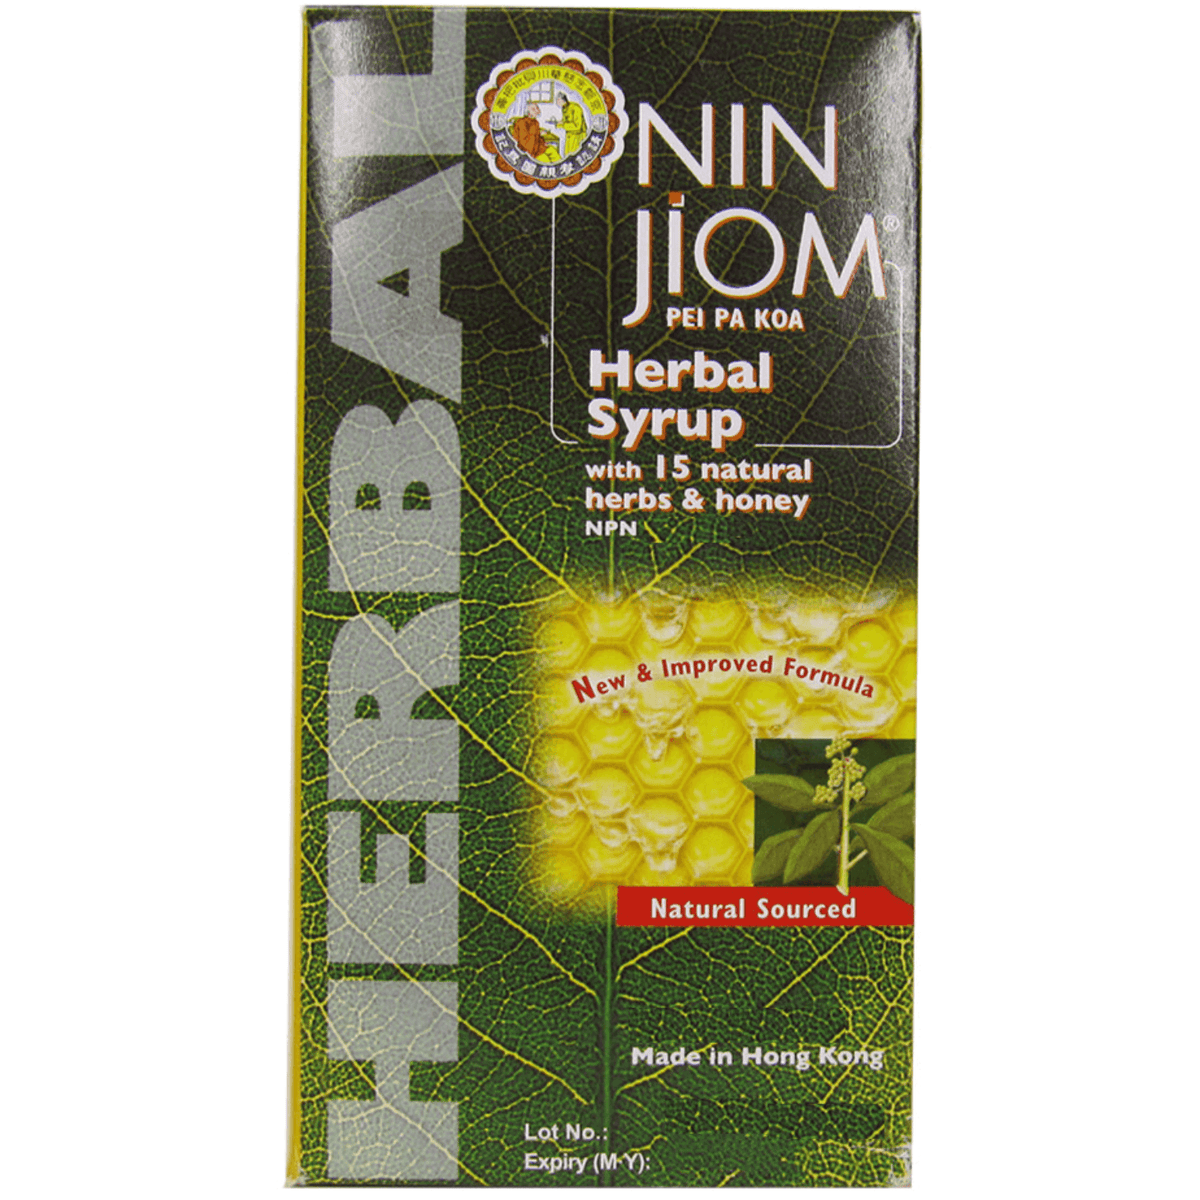 Nin Jiom Cough Syrup Herbal 150mL Cough, Cold & Flu at Village Vitamin Store